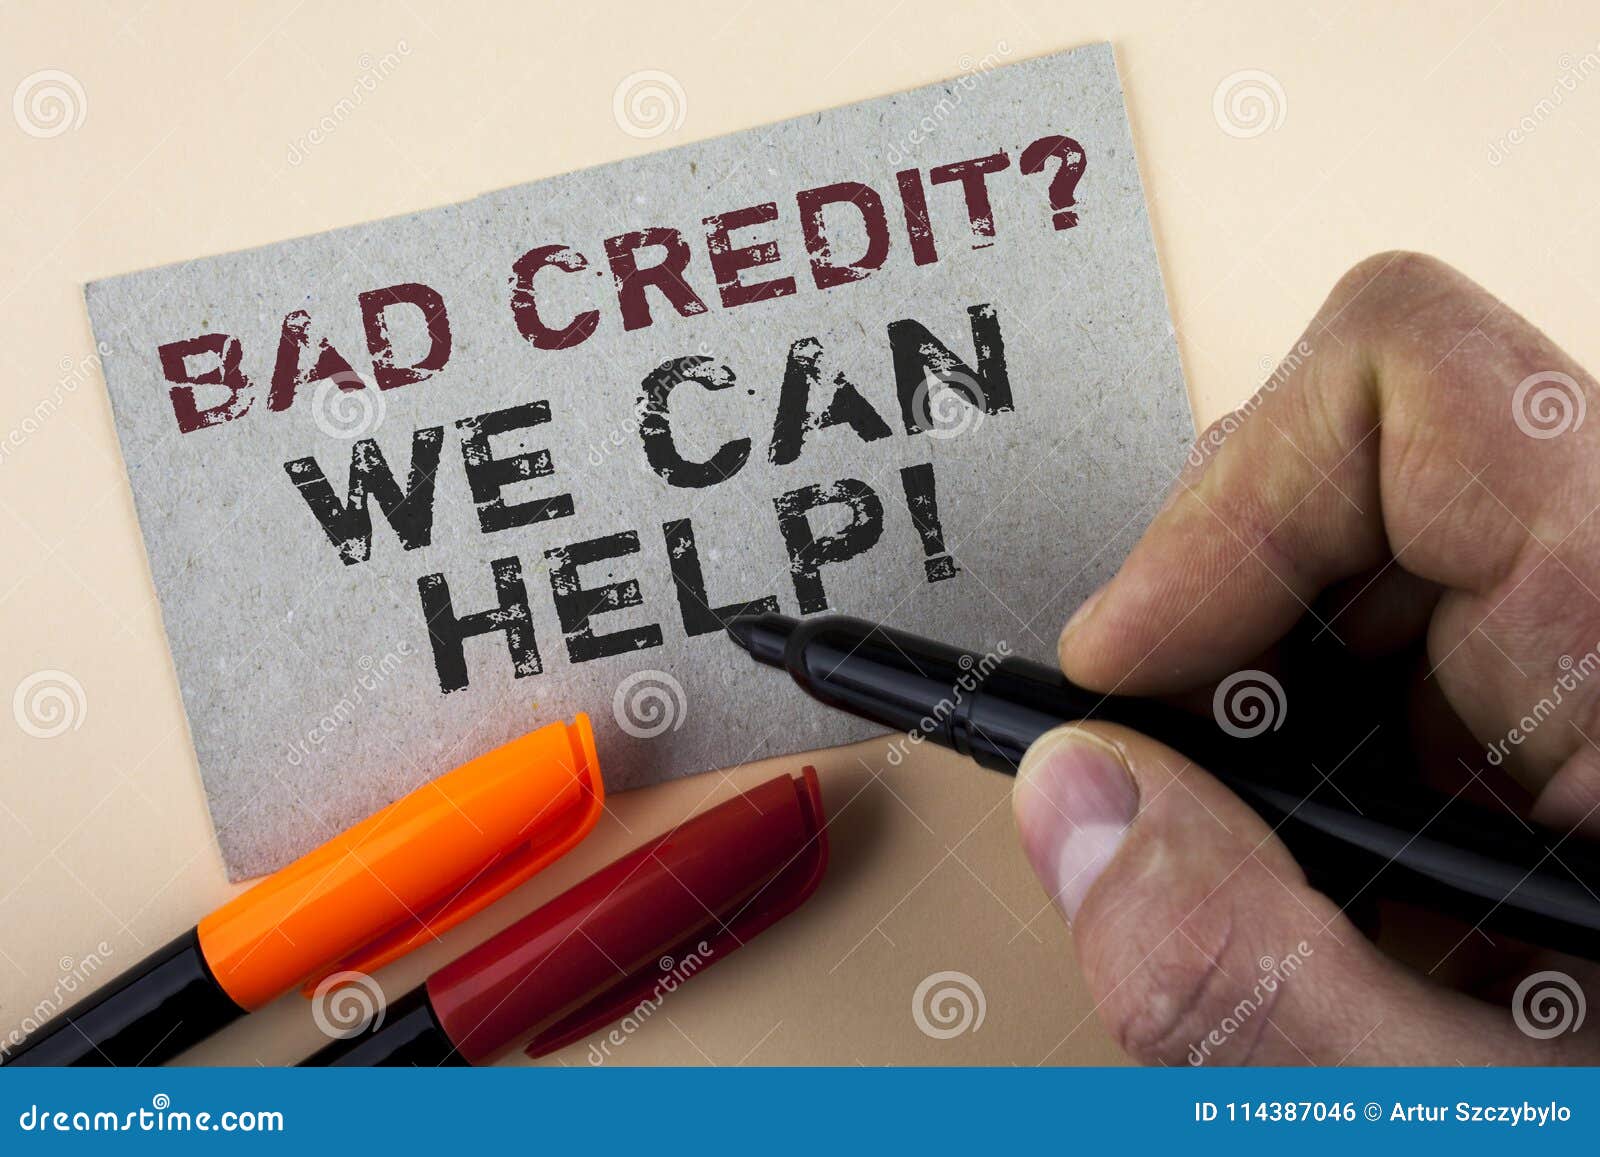 bad credit personal loans 35000